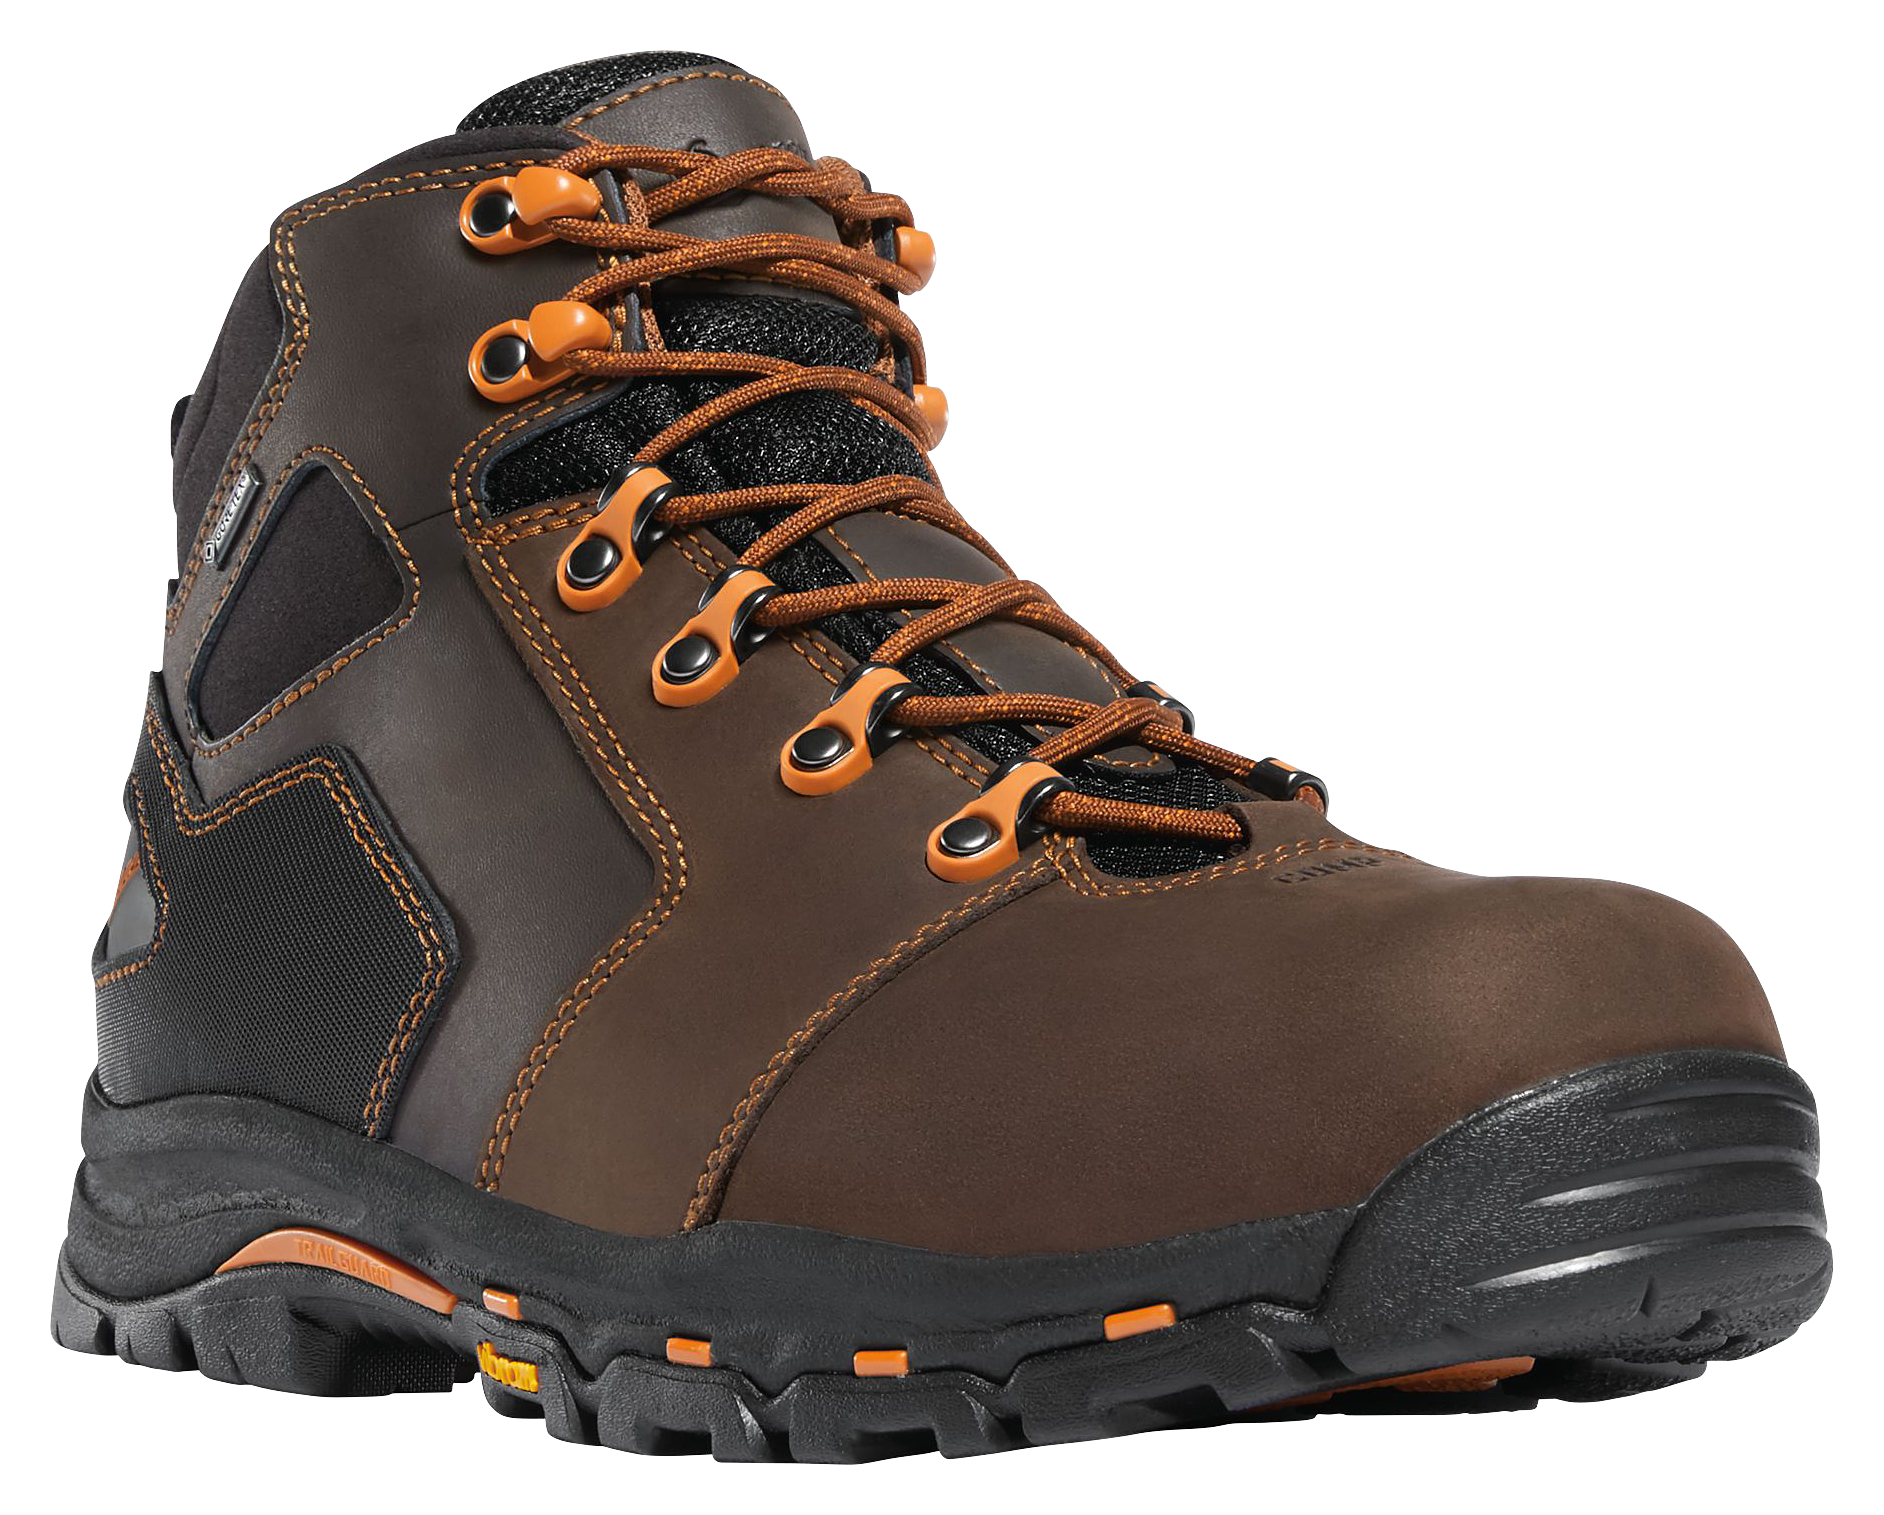 Danner Vicious 4.5'' GORE-TEX EH Work Boots for Men - Brown/Orange - 13W